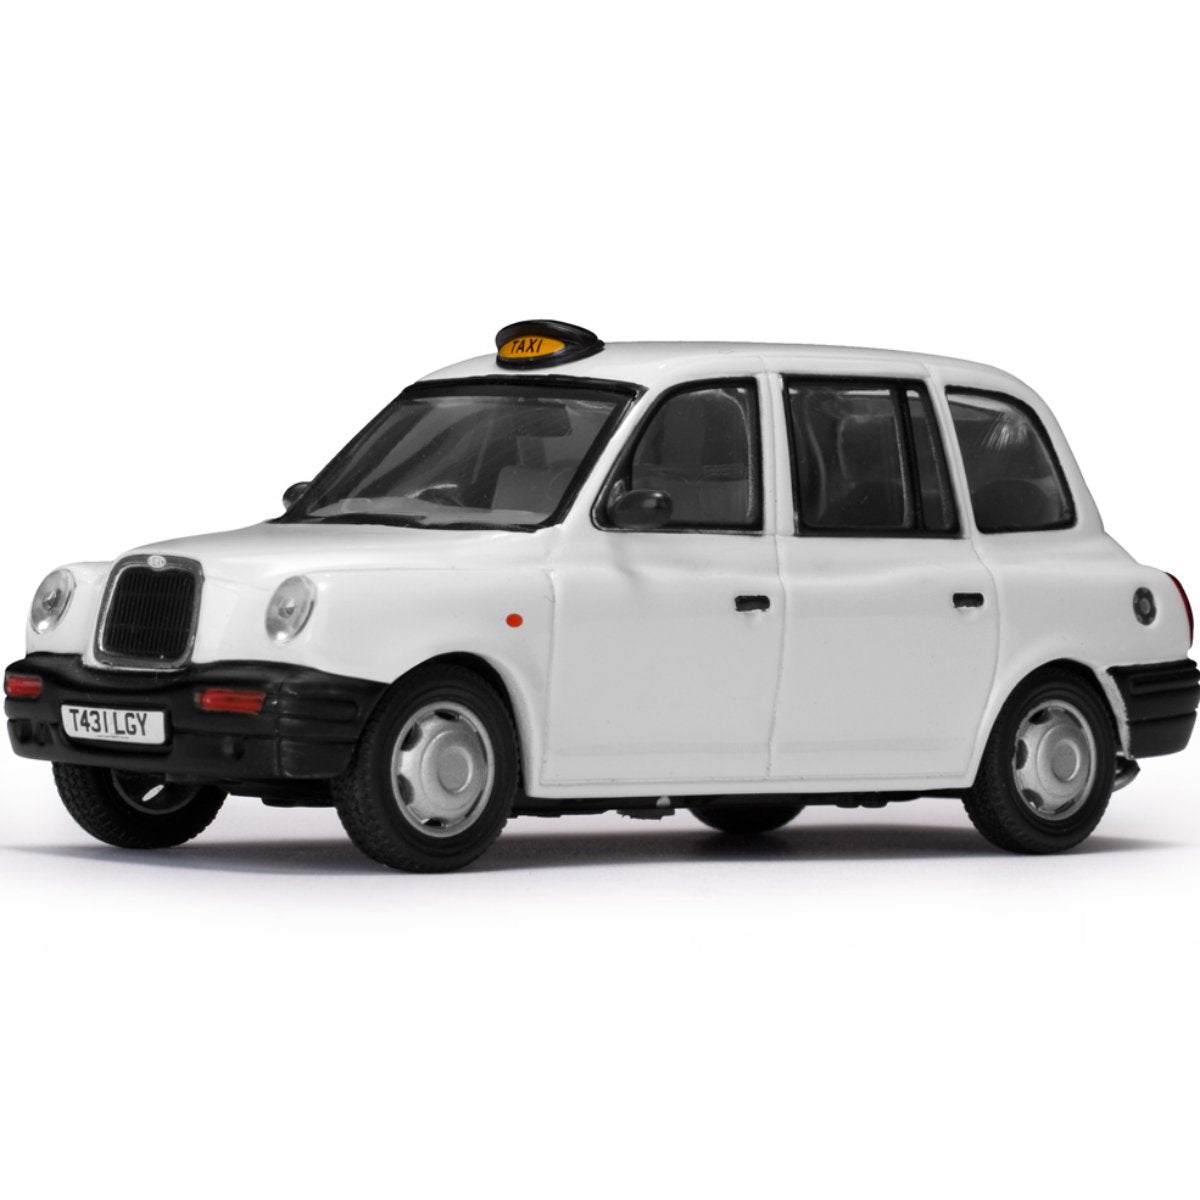 Vitesse 1998 TX1 London Taxi Cab - White - Phillips Hobbies